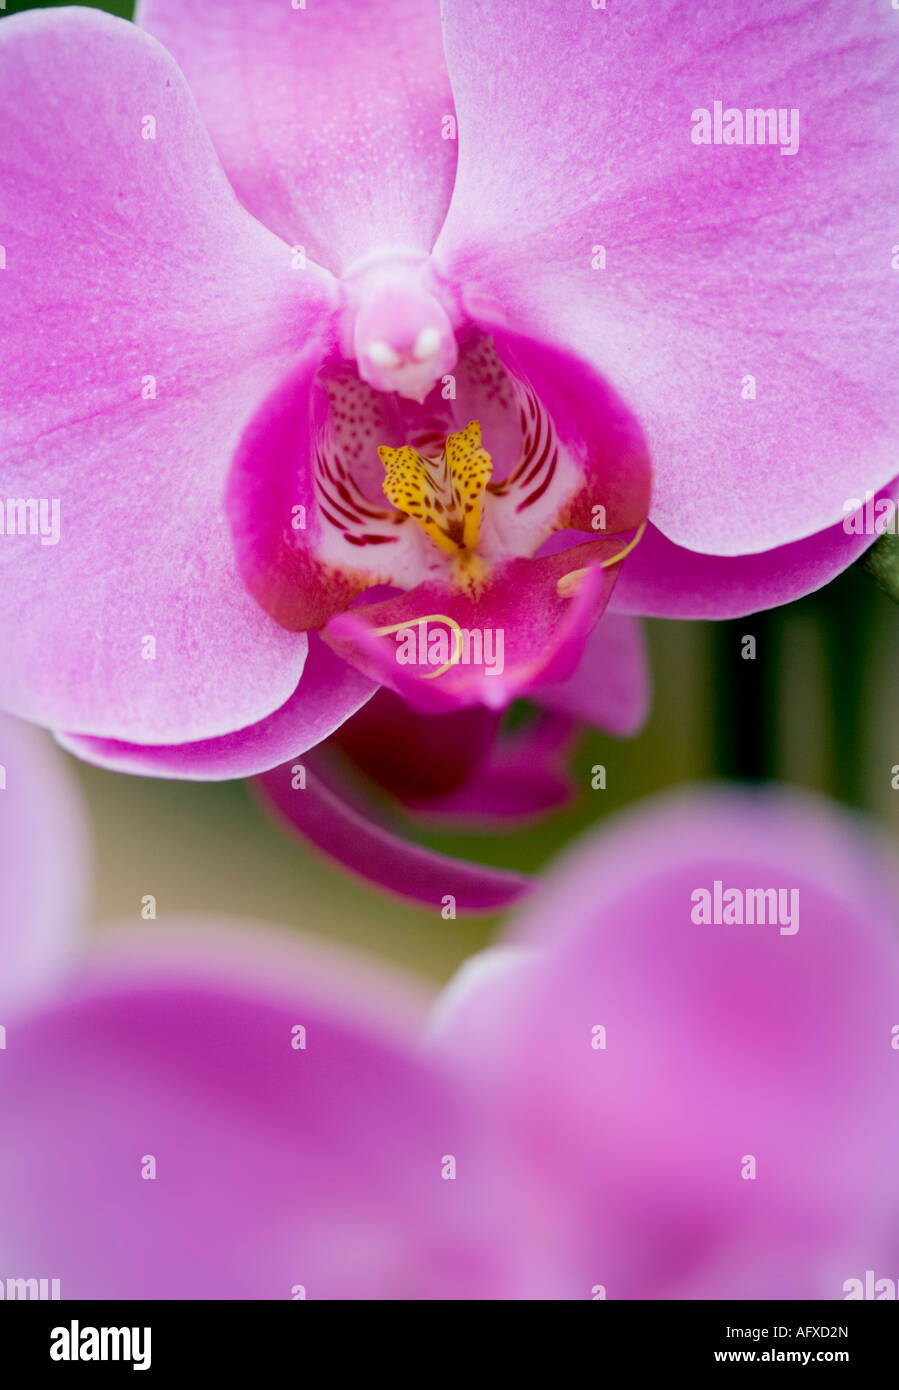 Rosa Orchidee Blume im detail Stockfoto